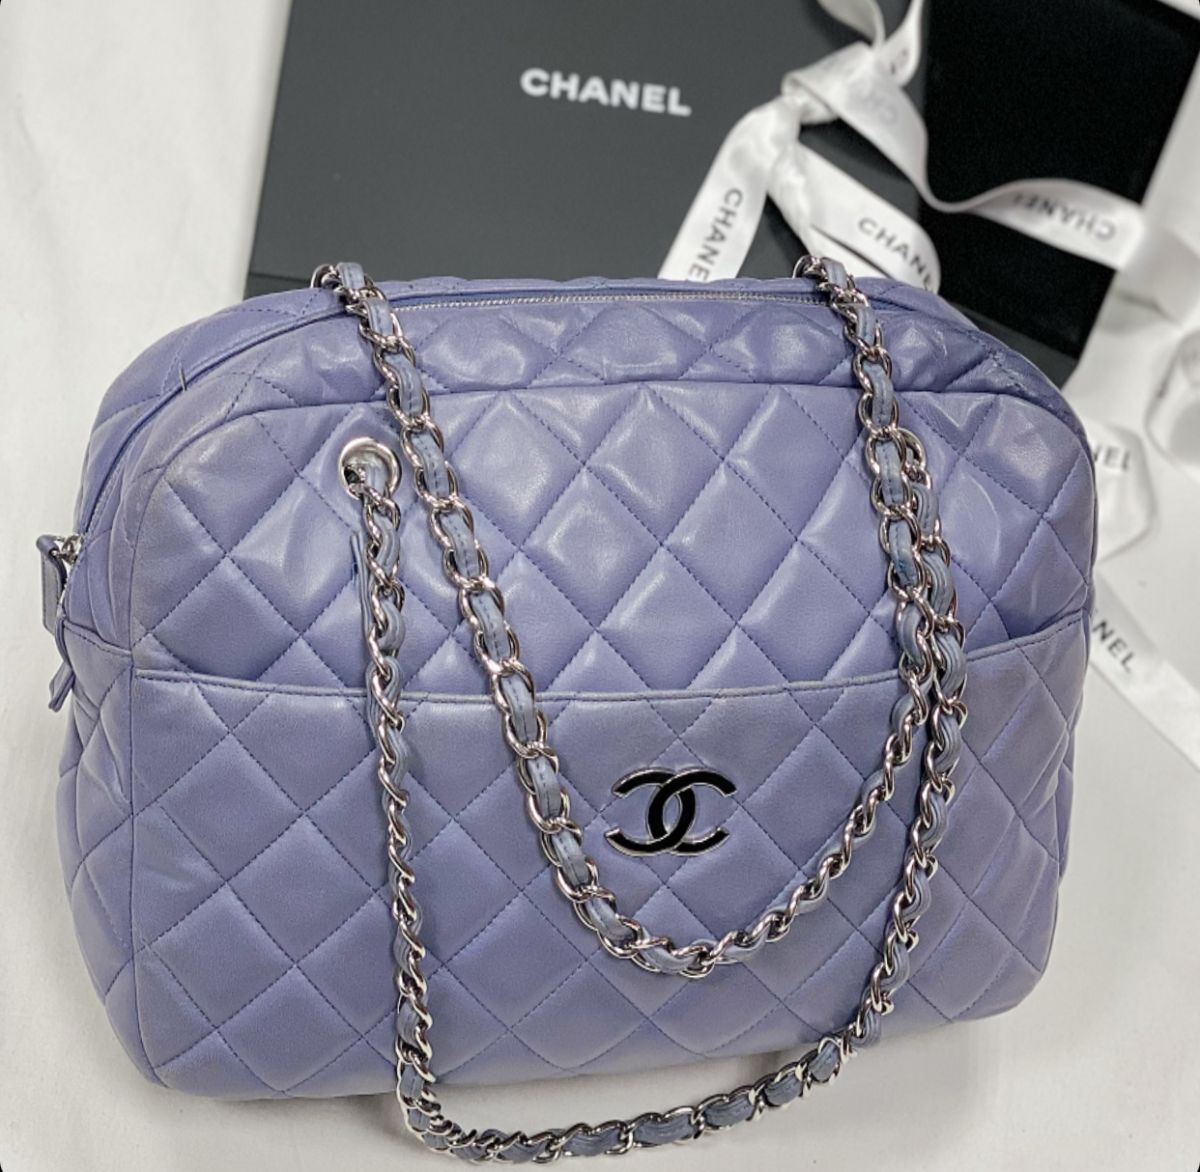 Сумка Chanel размер 30/20 цена 123 080 руб